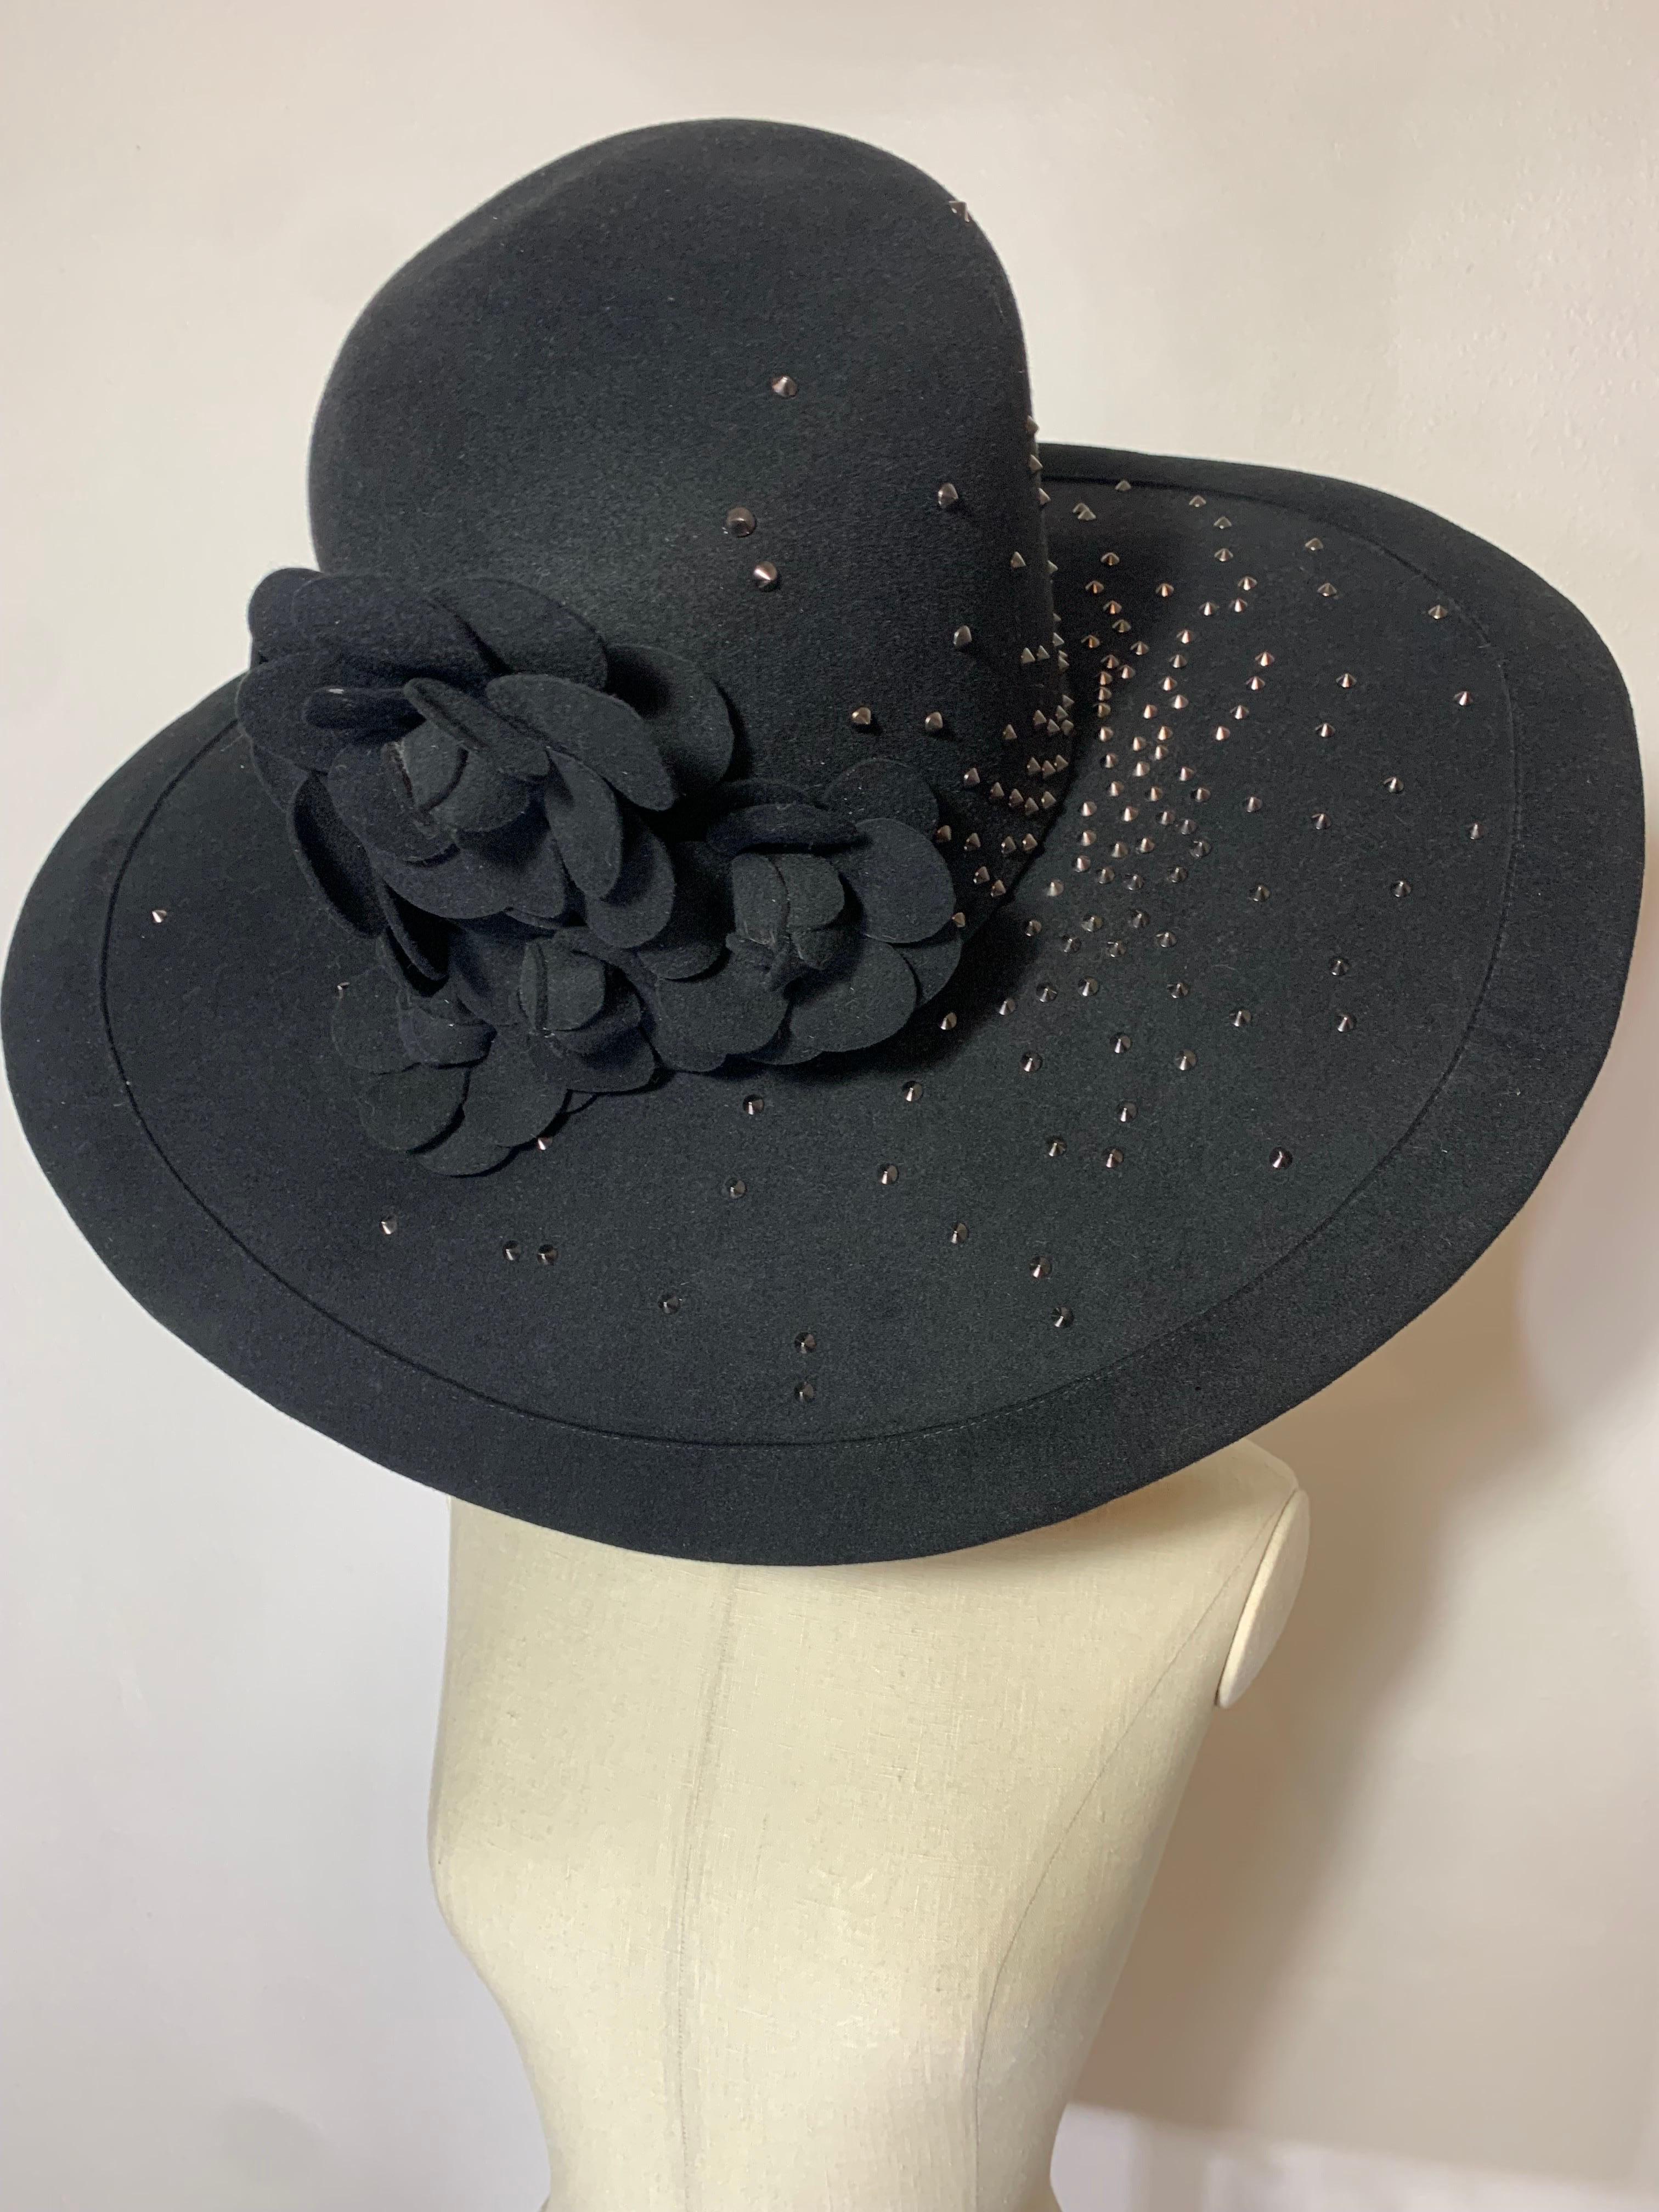 Maison Michel Black Large Brimmed Felt High Crown Hat w Studs & Camellia Flowers For Sale 9